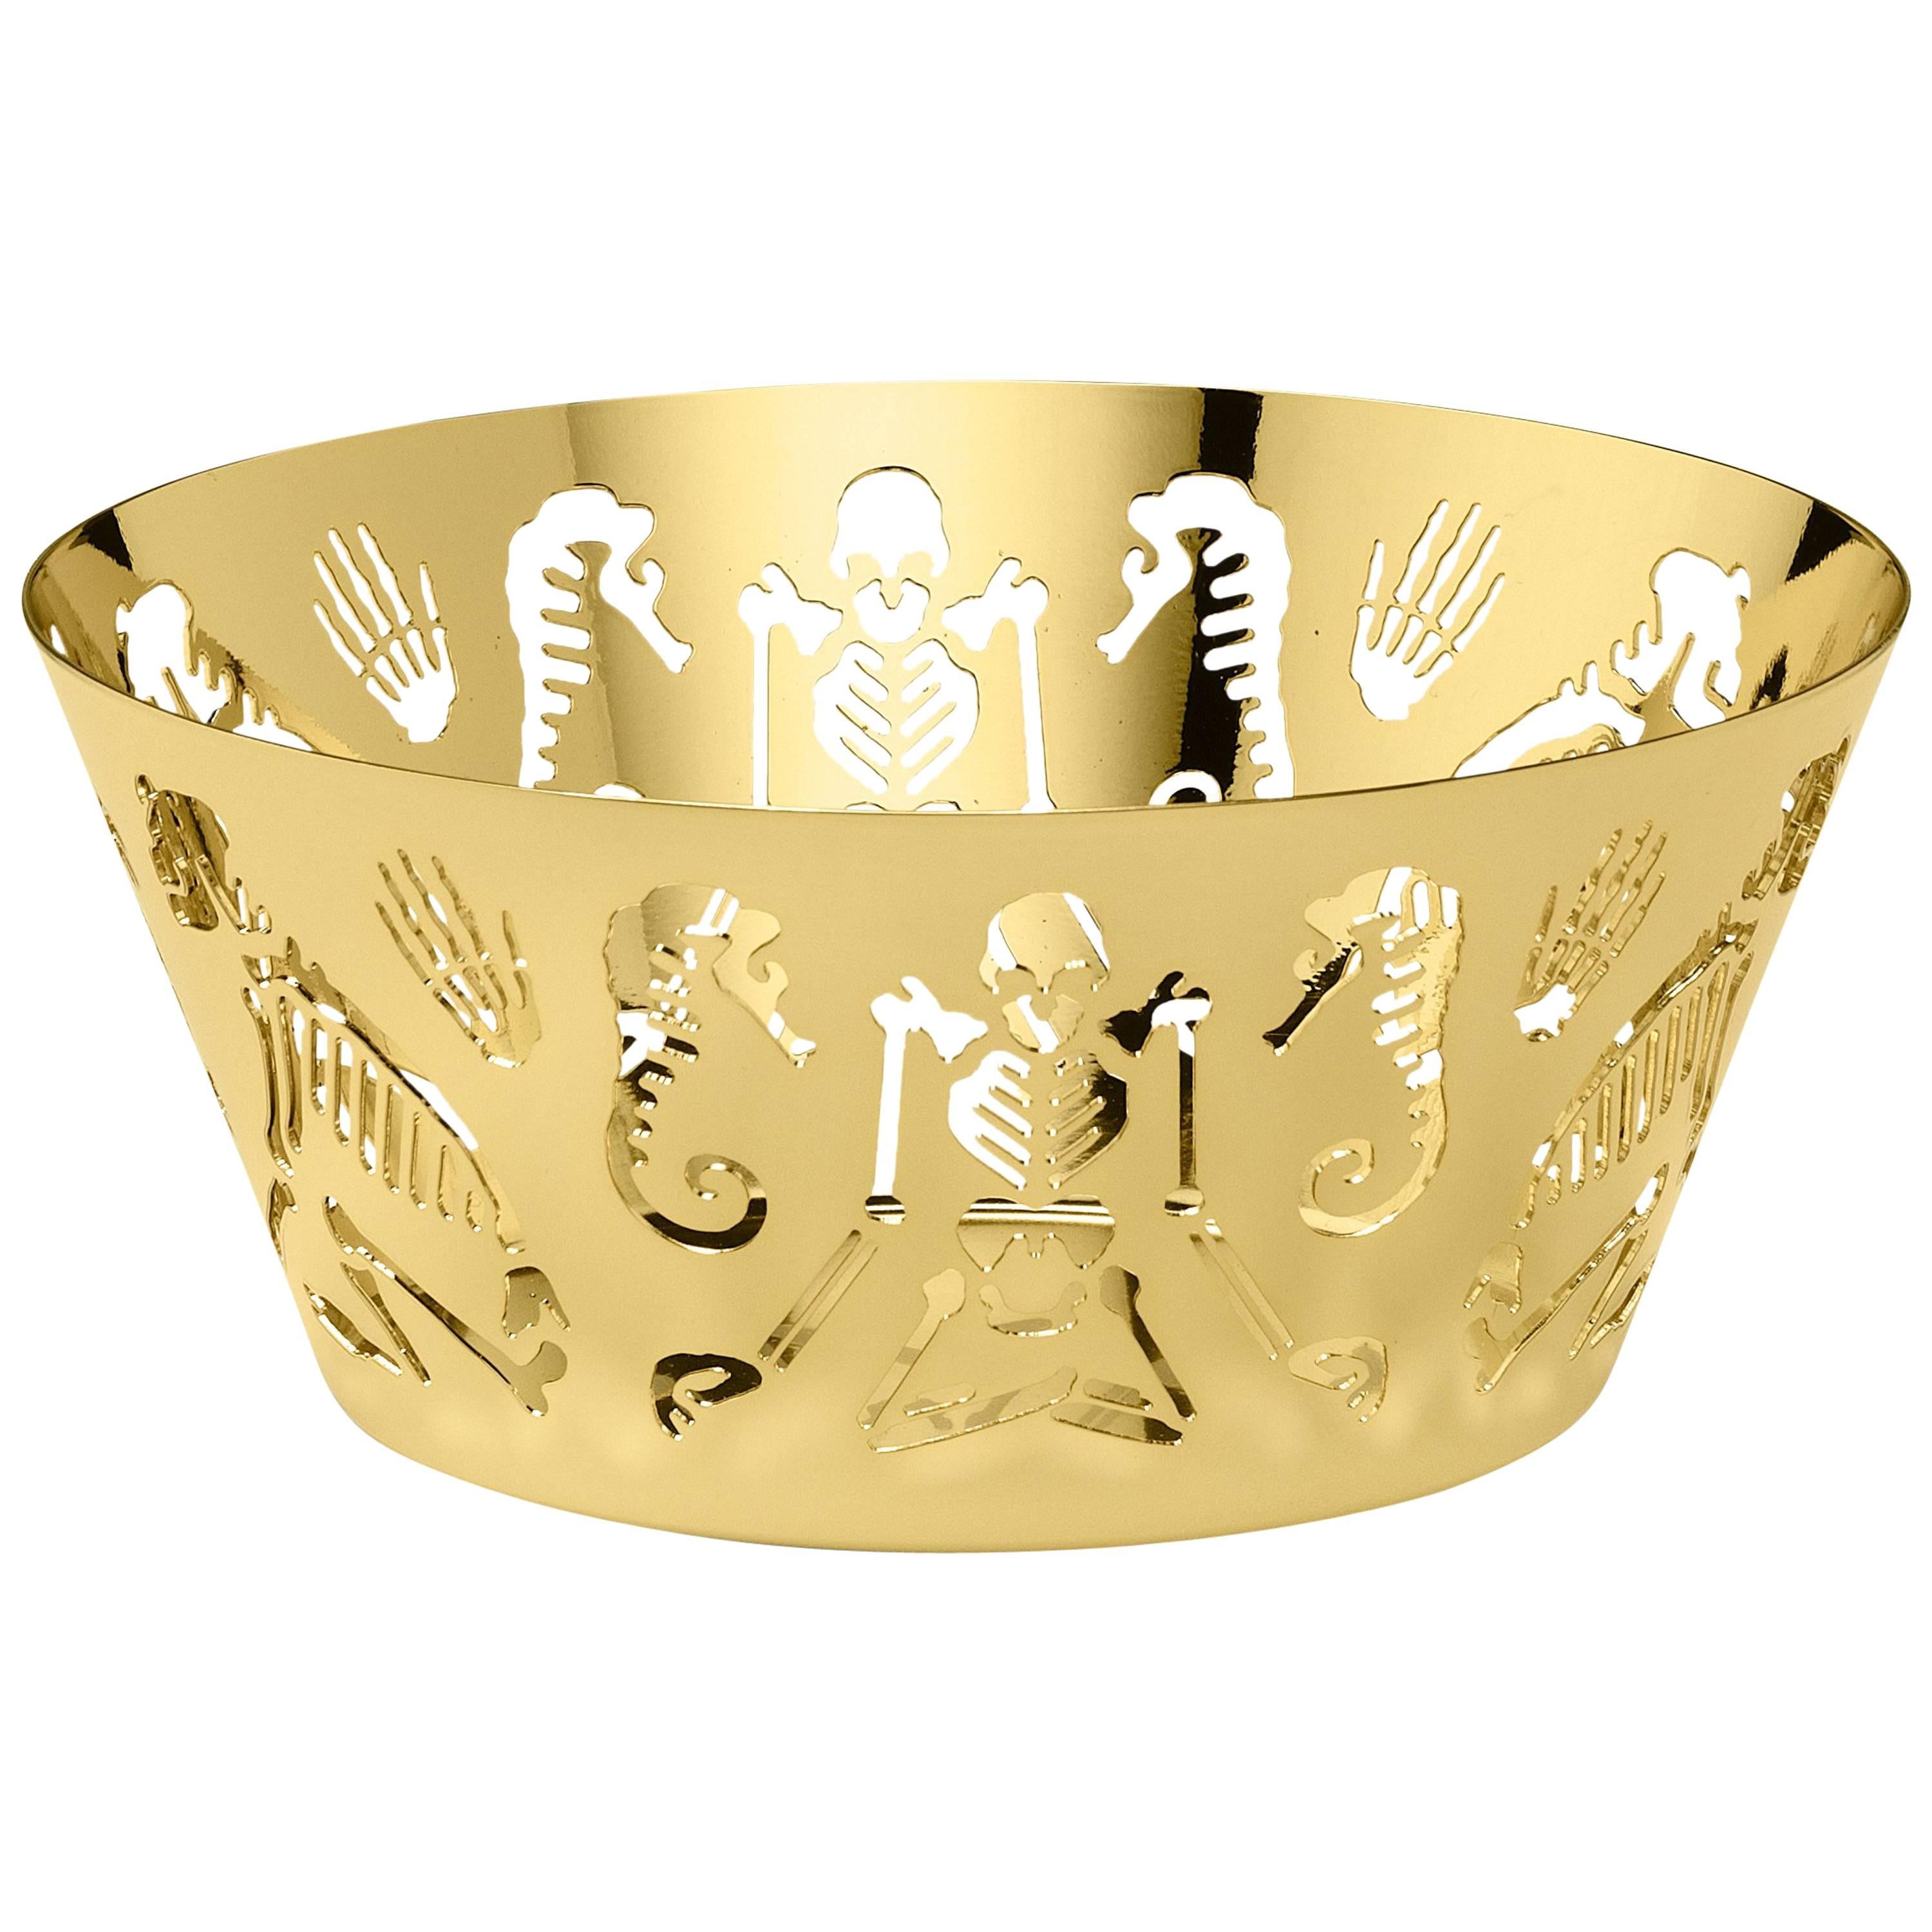 Ghidini 1961 Perished Medium Bowl in Polished Gold Finish For Sale